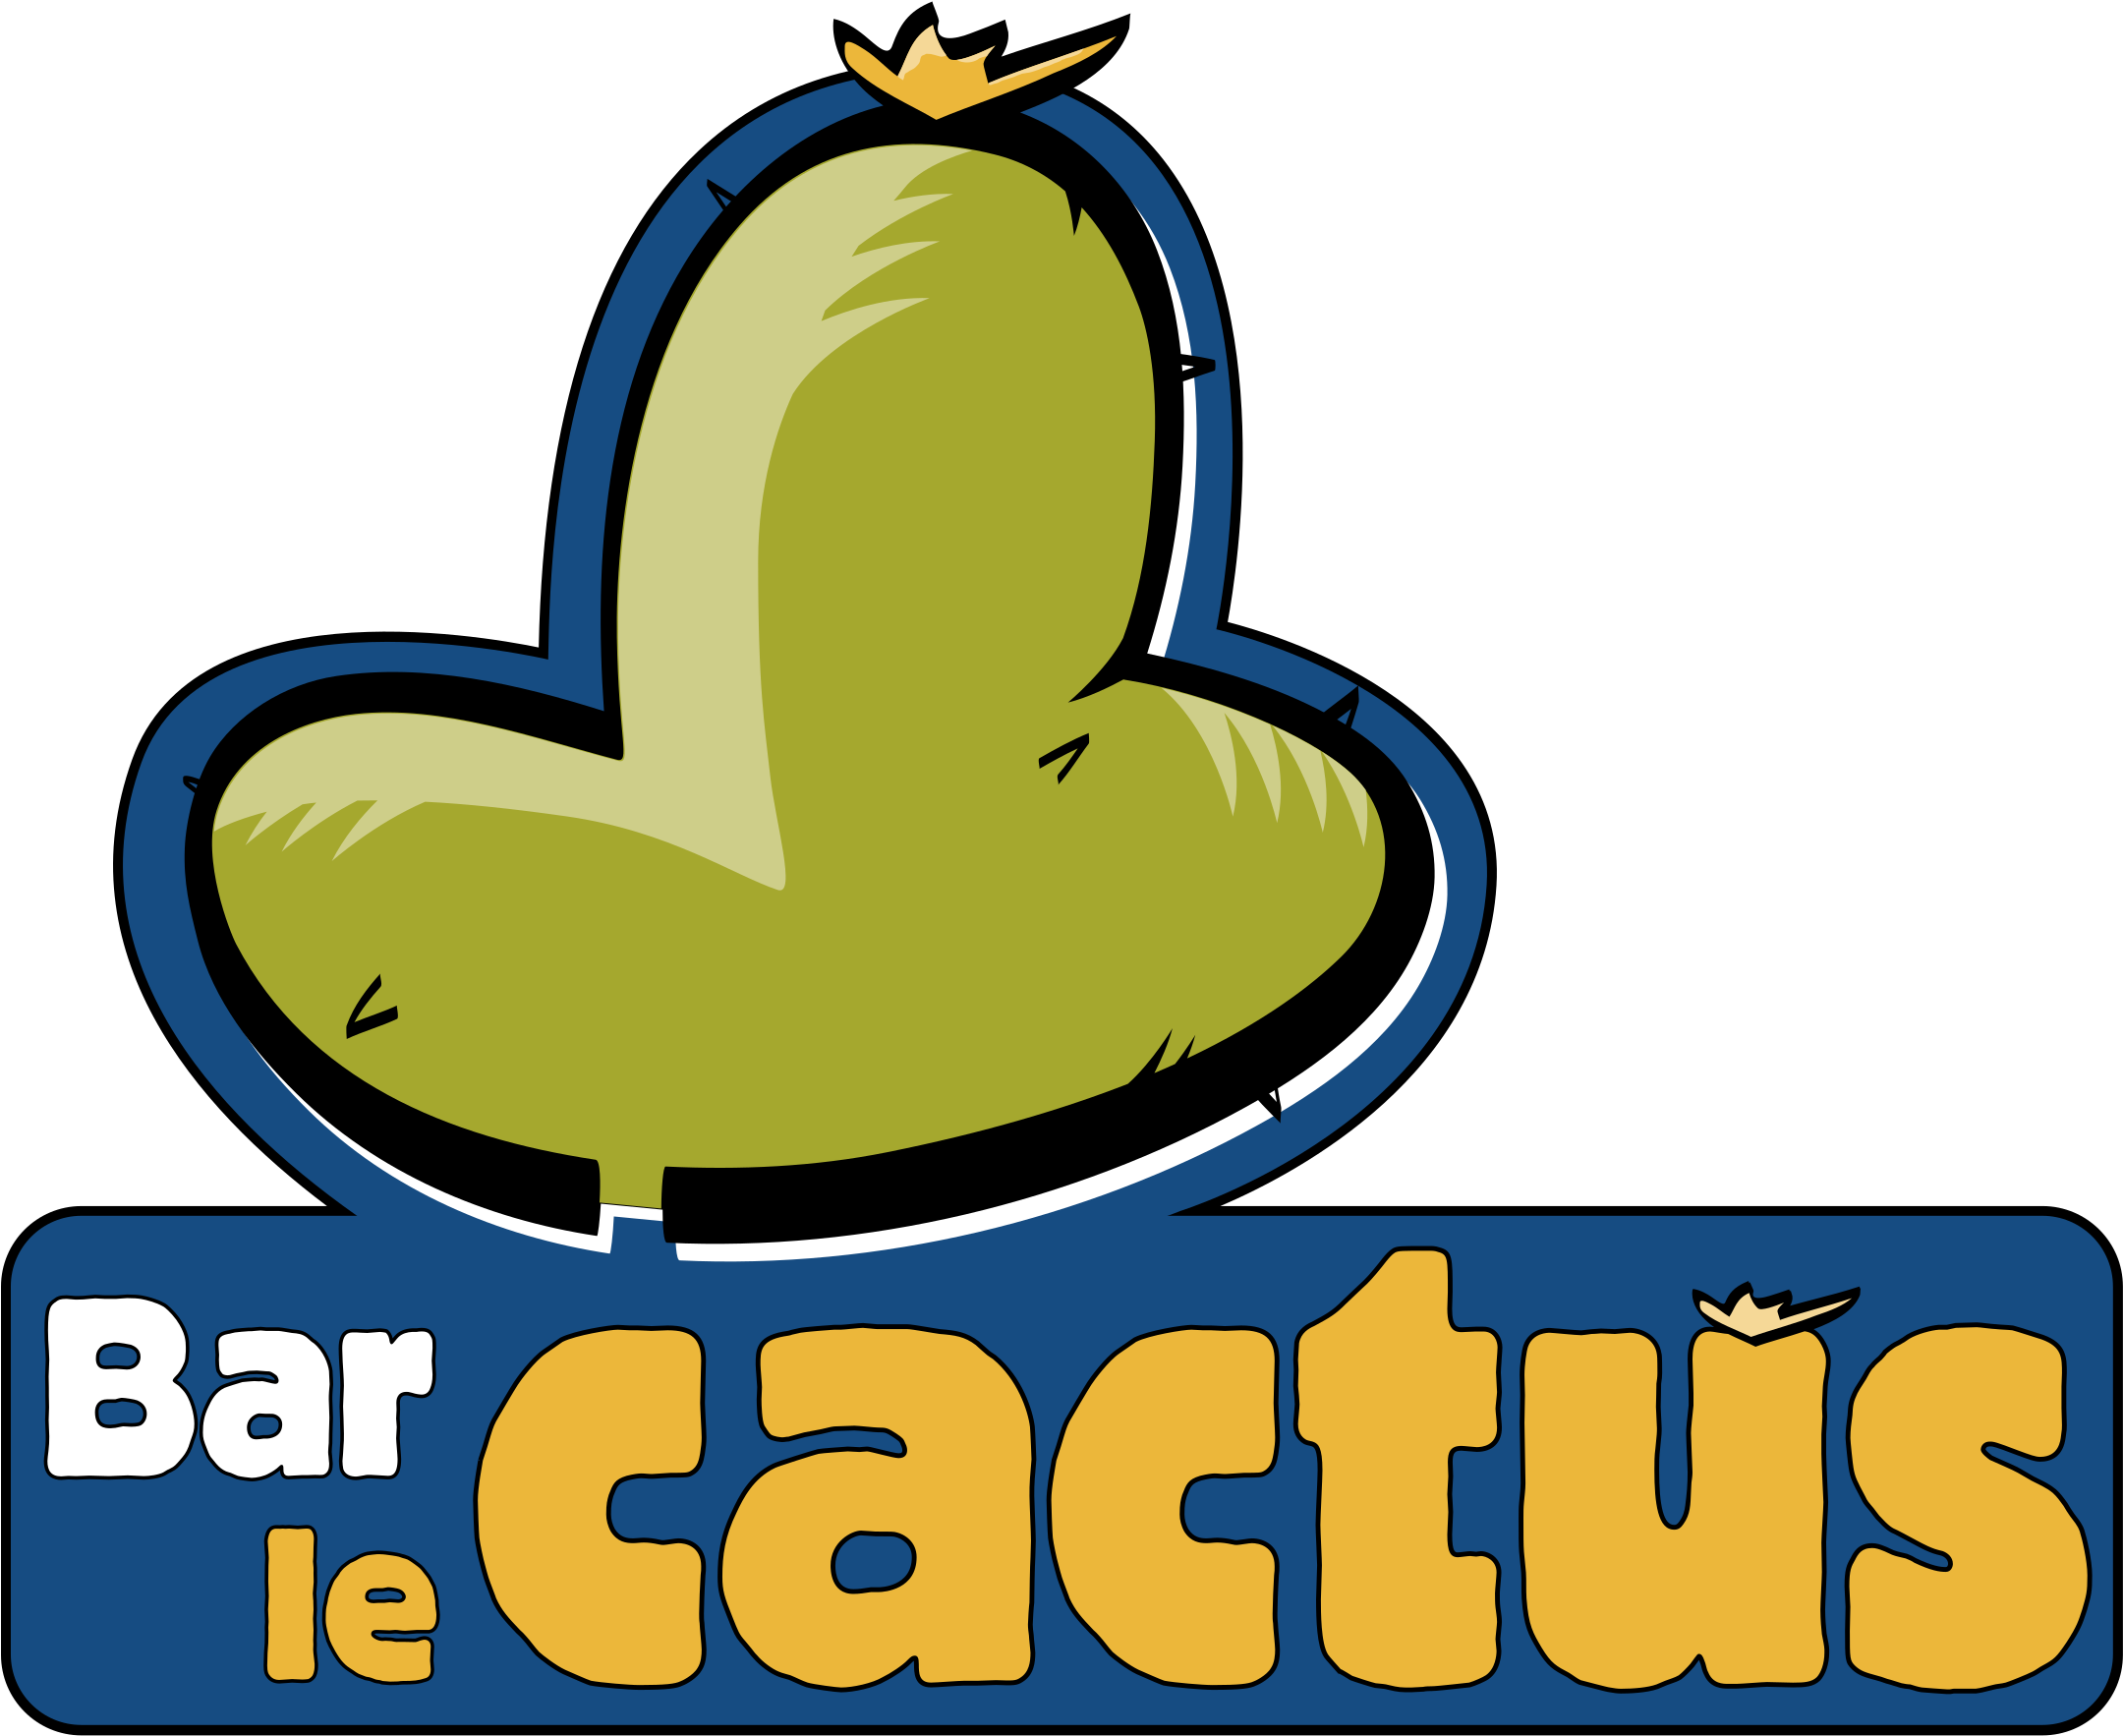 Bar Le Cactus 01 Logo Png Transparent Svg Vector Freebie - โลโก้ แค ค ตั ส (2400x2400)